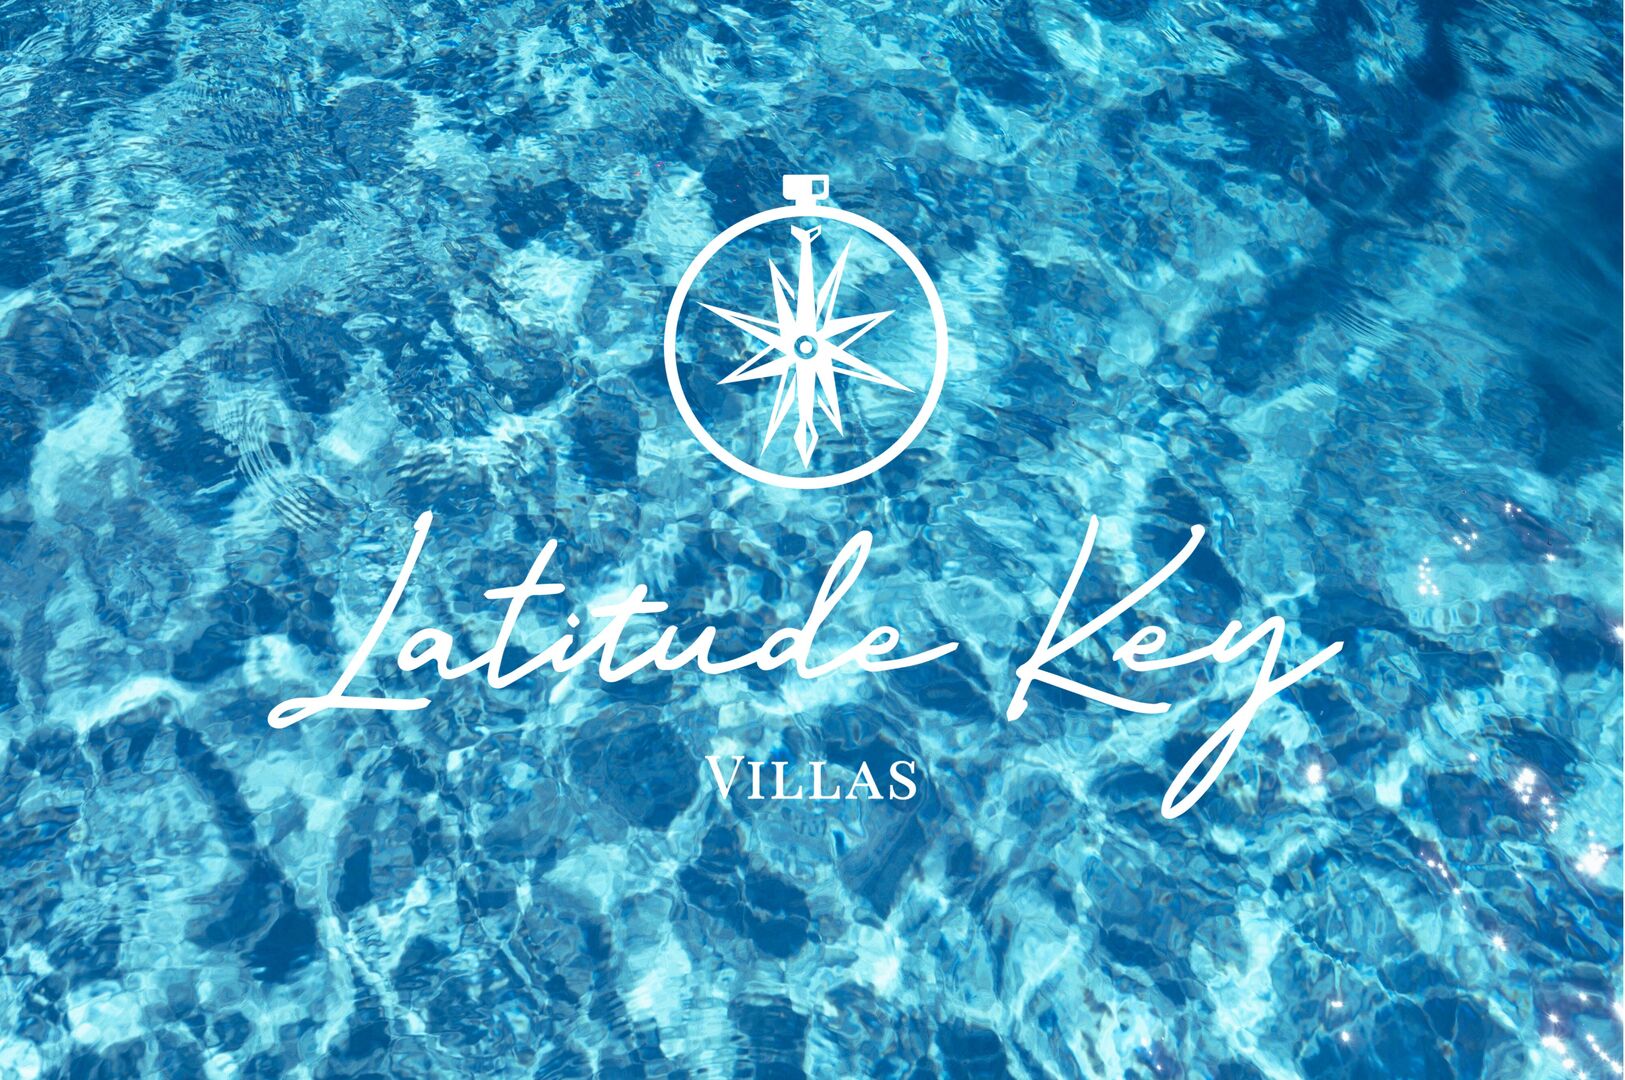 Hemingway Key is part of the Latitude Key Villas Collection